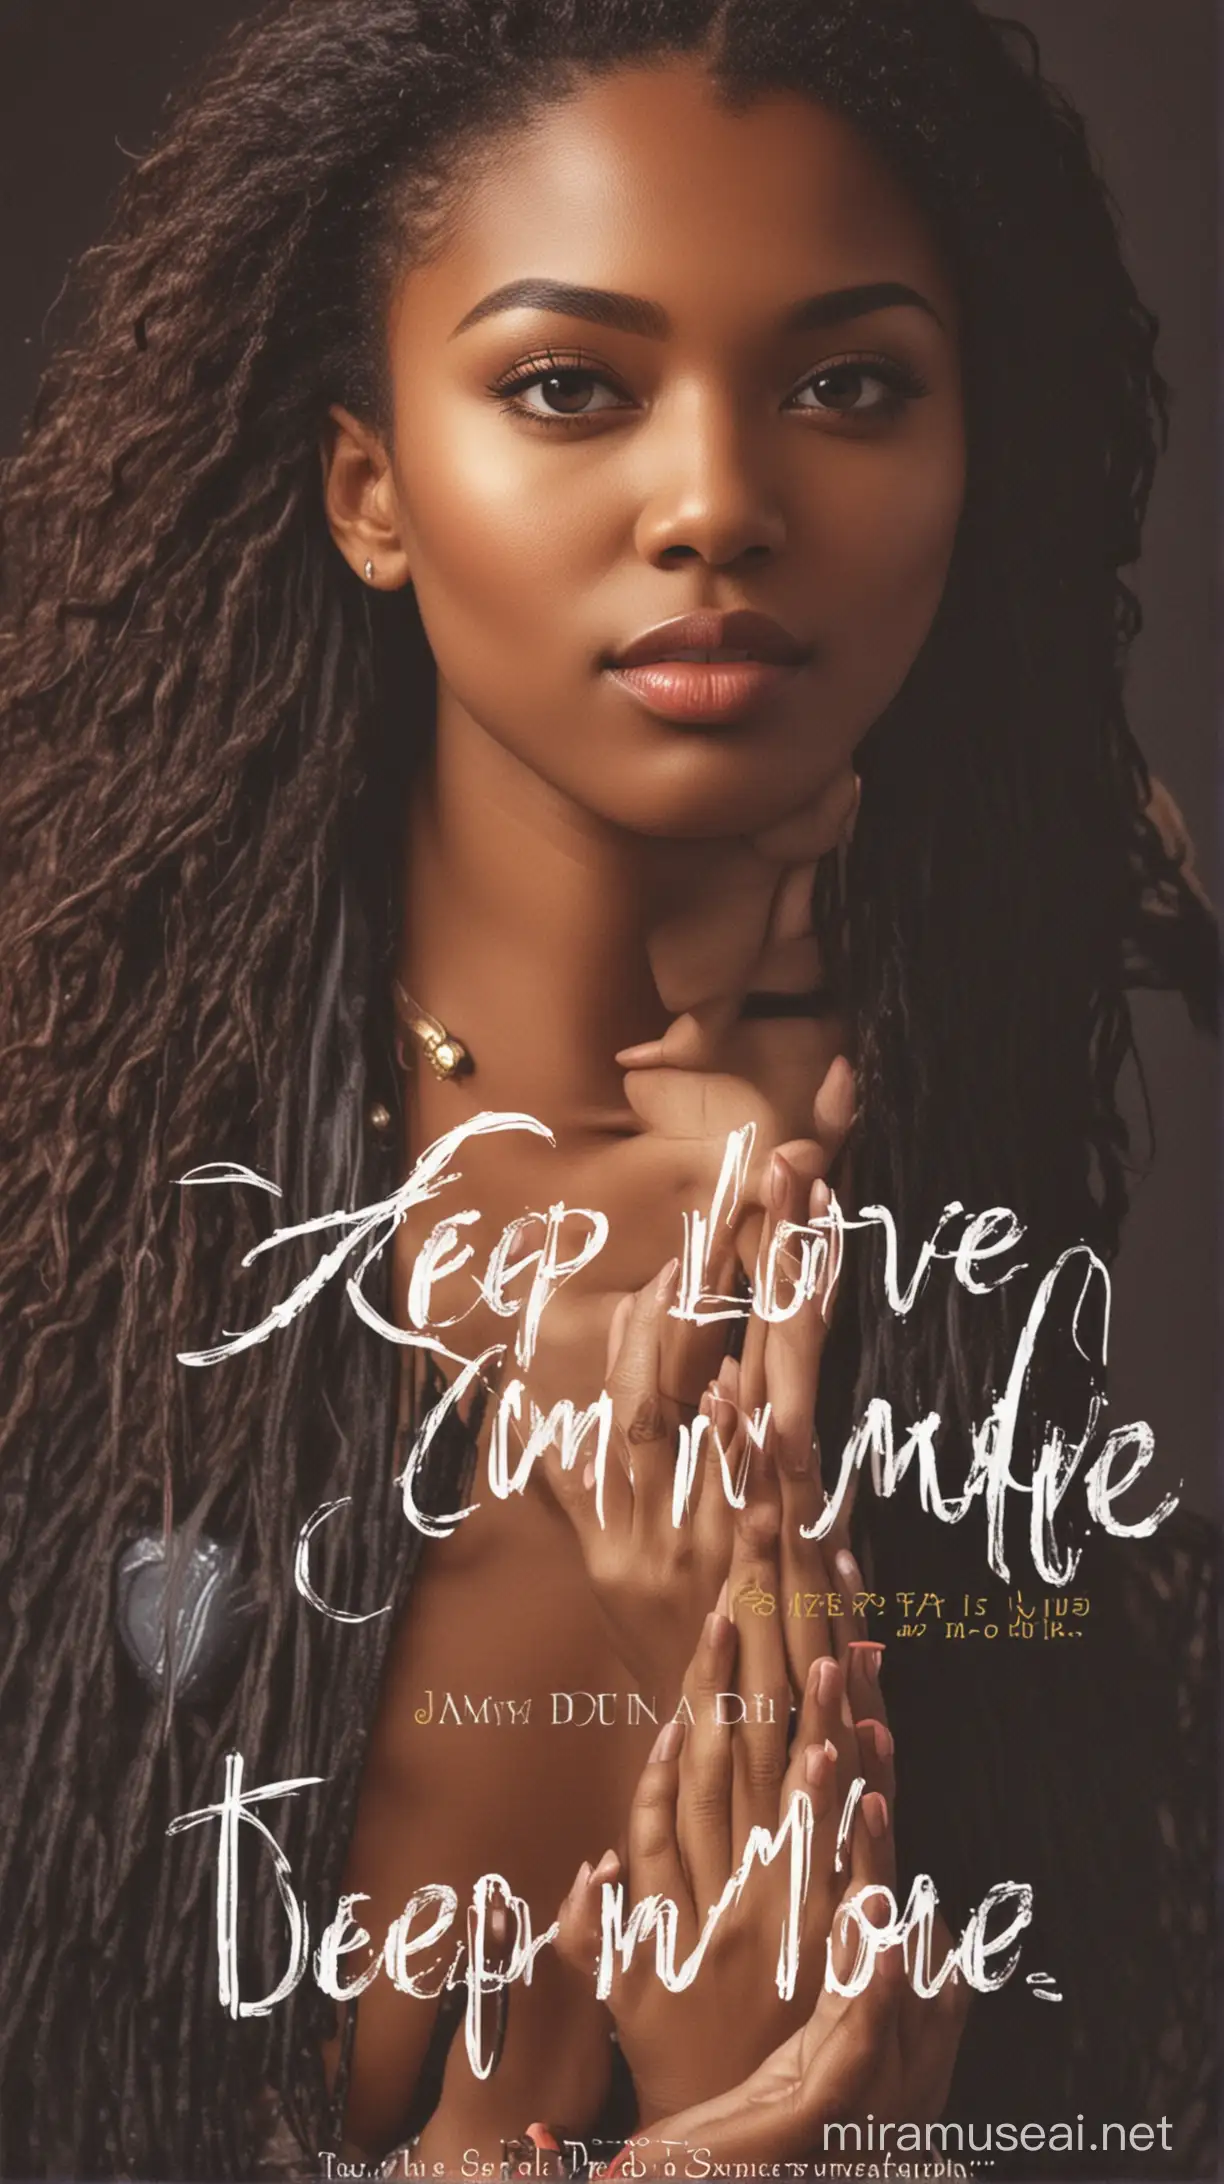 Deep Love A Heartfelt Romance Novel Cover